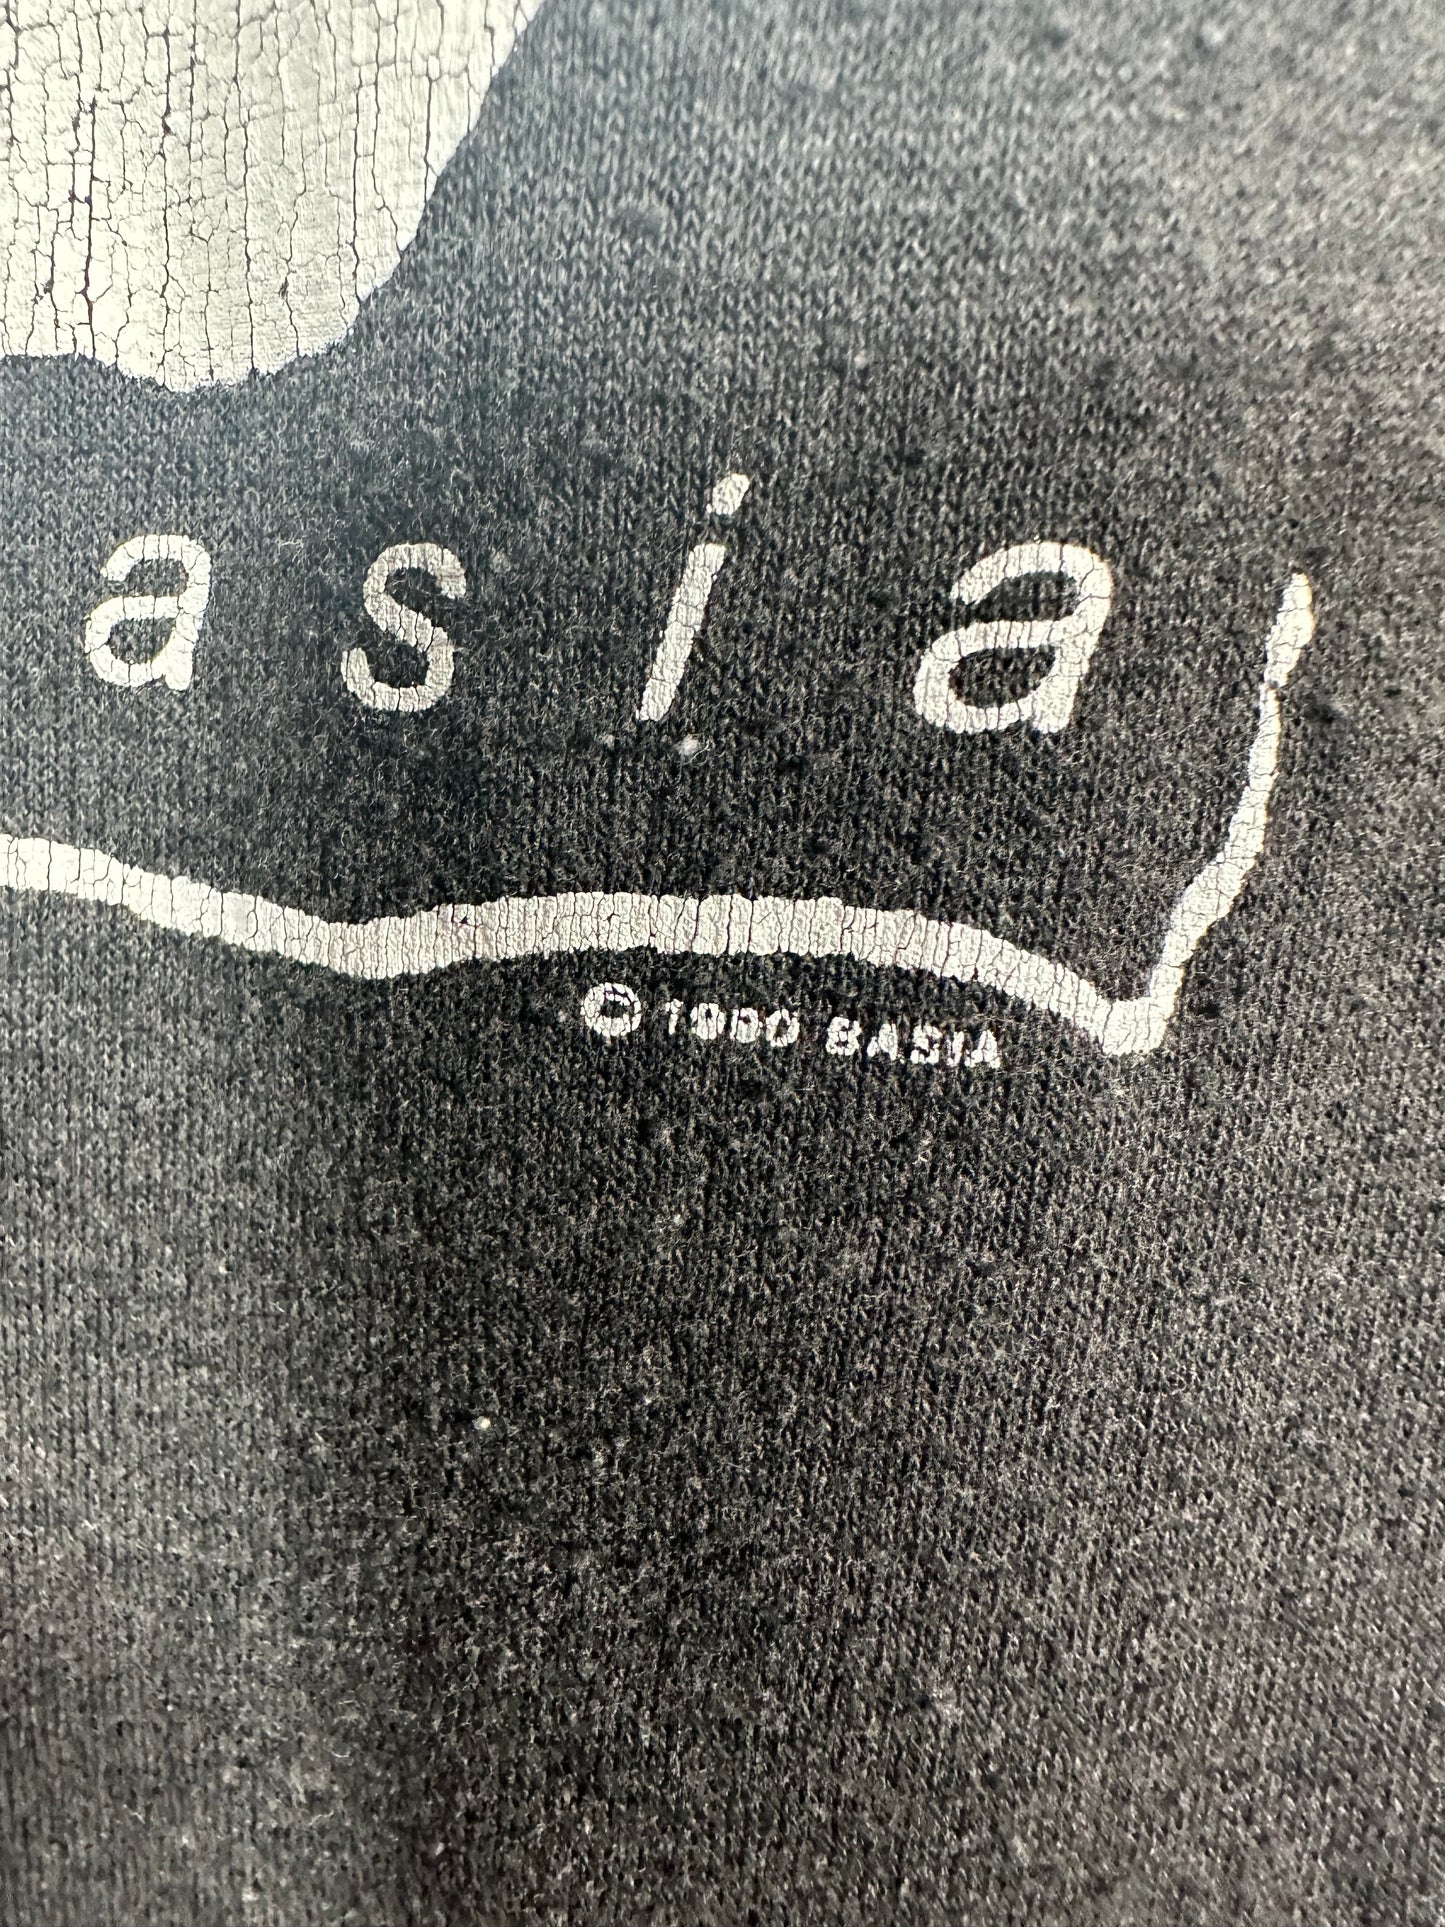 90s Basia T Shirt - M